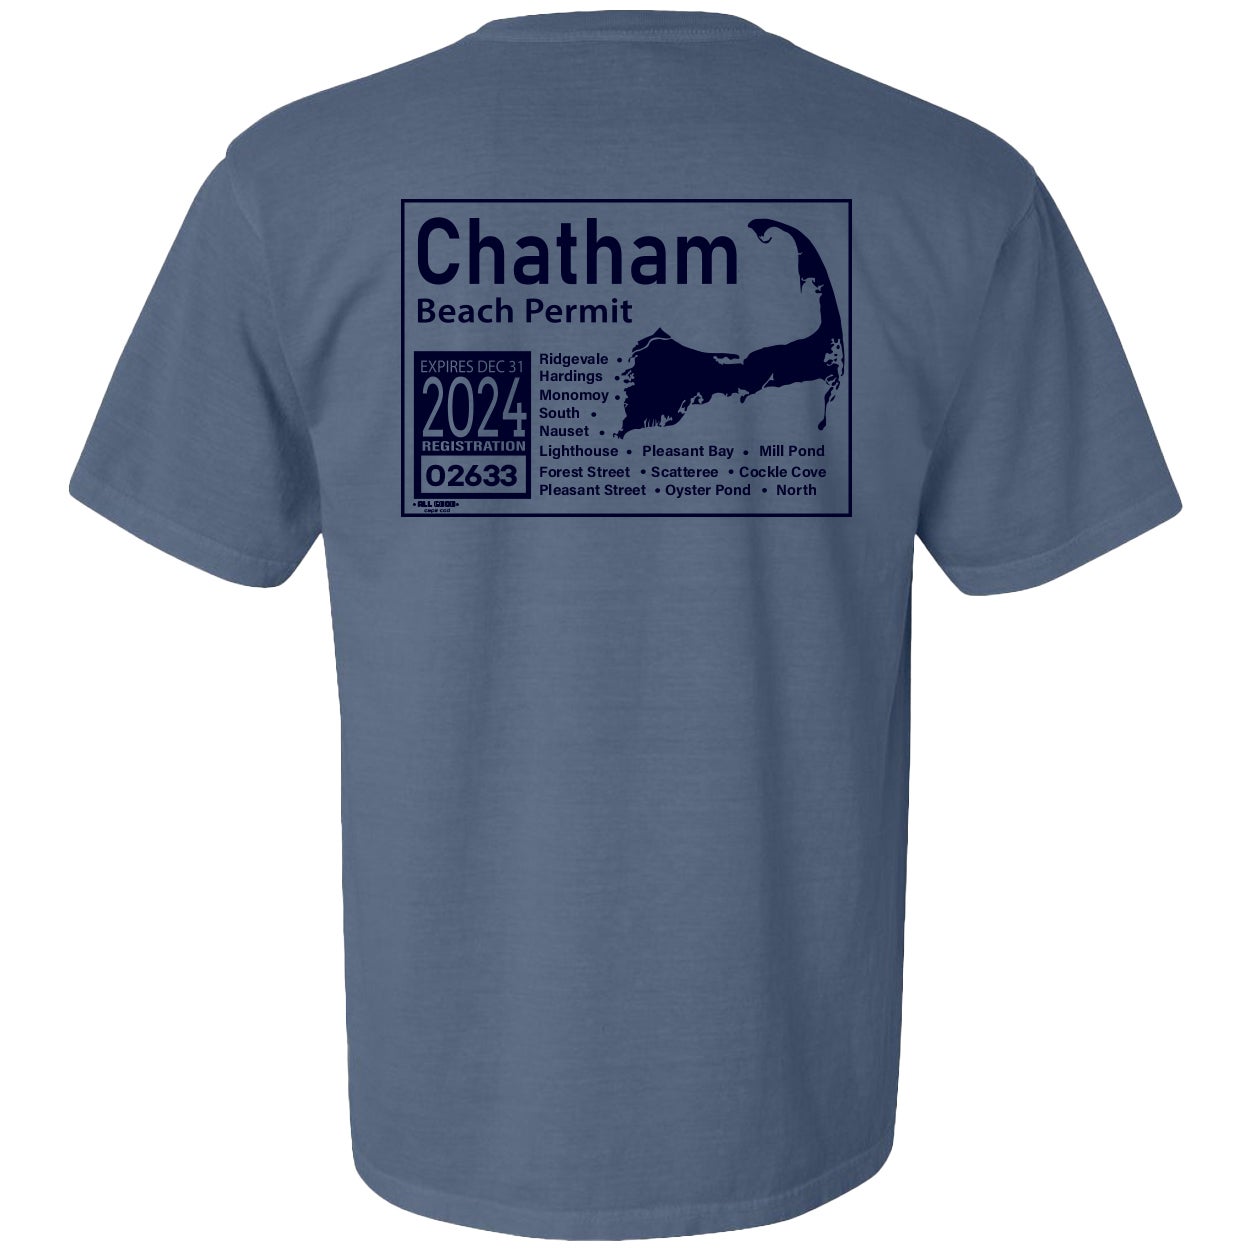 Short COD Chatham Sleeve Permit GOOD | 2024 Jean/Navy CAPE Blue Beach ALL